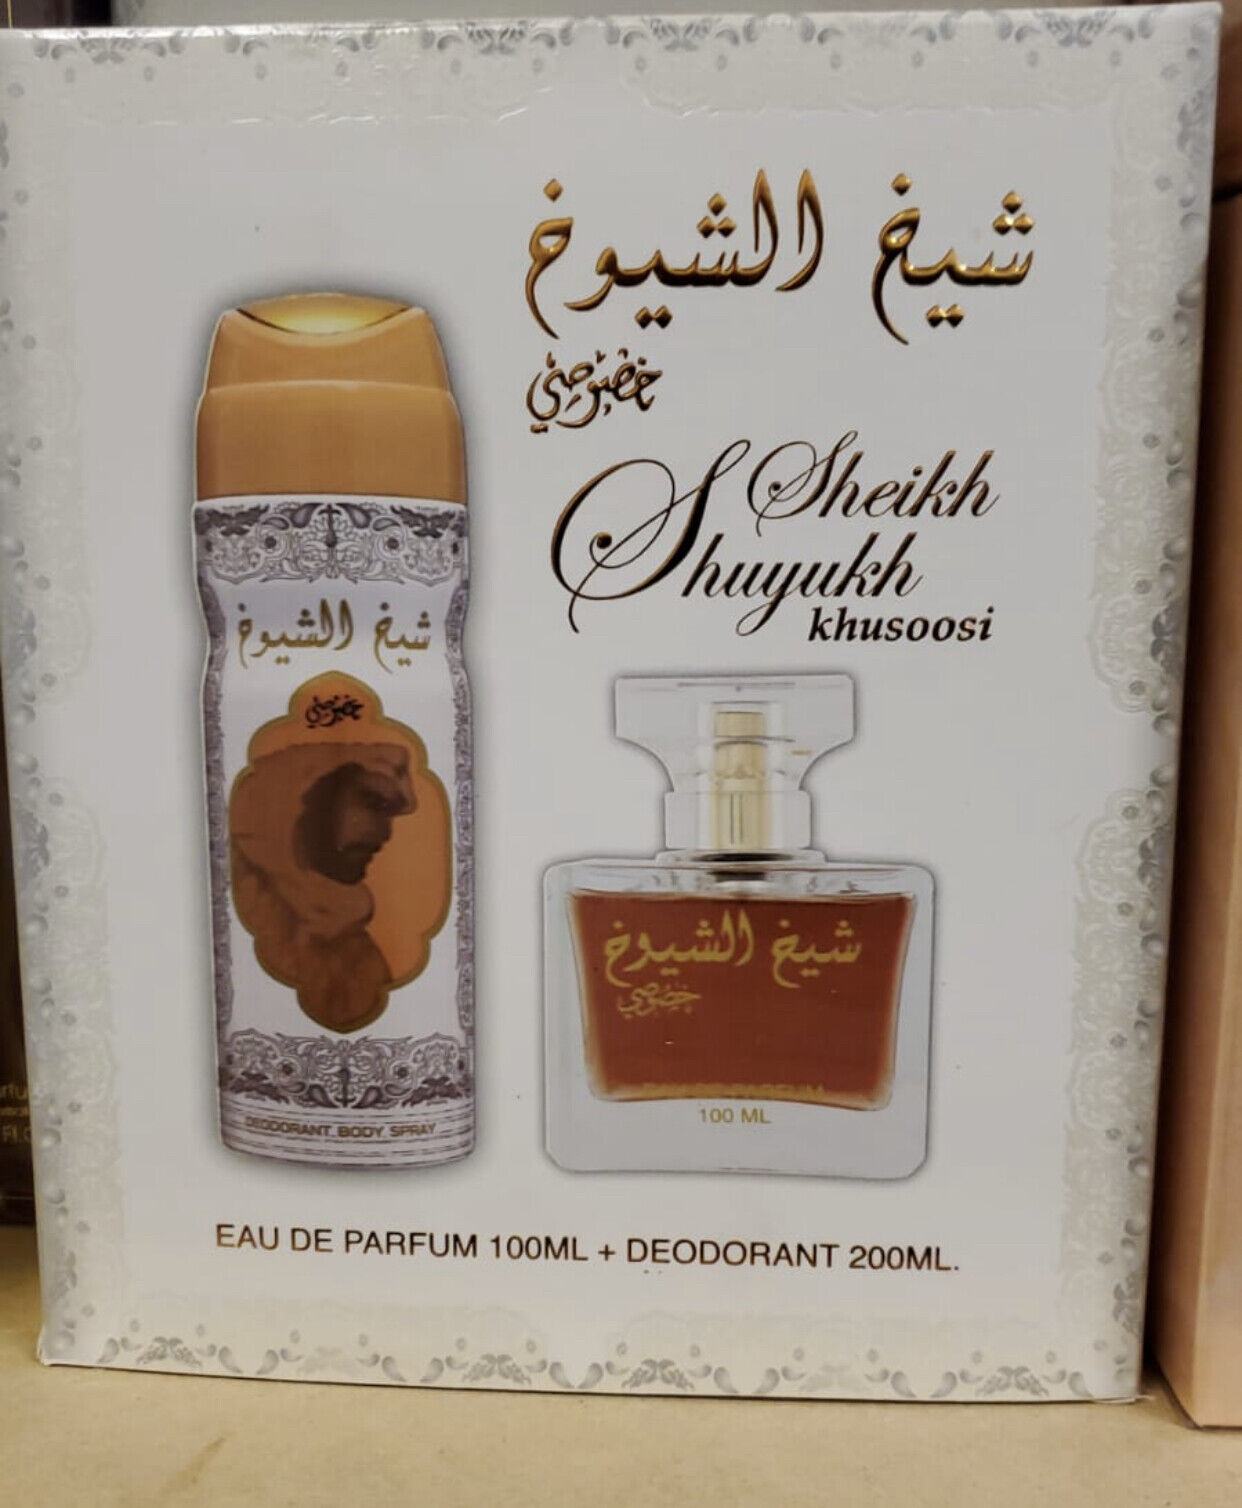 SHEIKH AL SHUYUKH KHUSOOSI EAU DE PARFUM BY LATAFFA-100 ML + DEO 200 ML